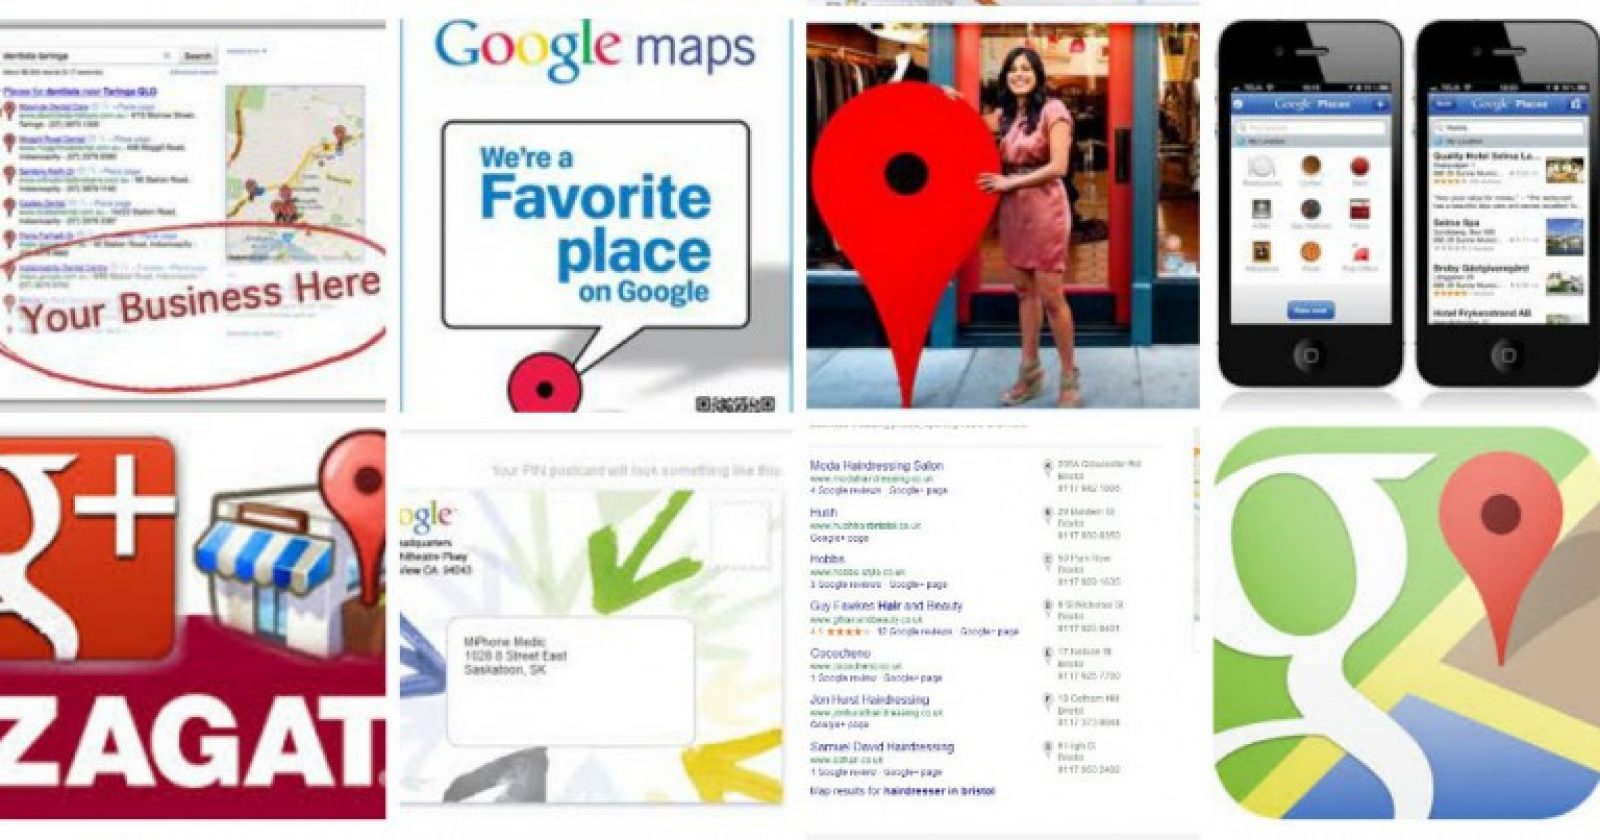 Google local collage